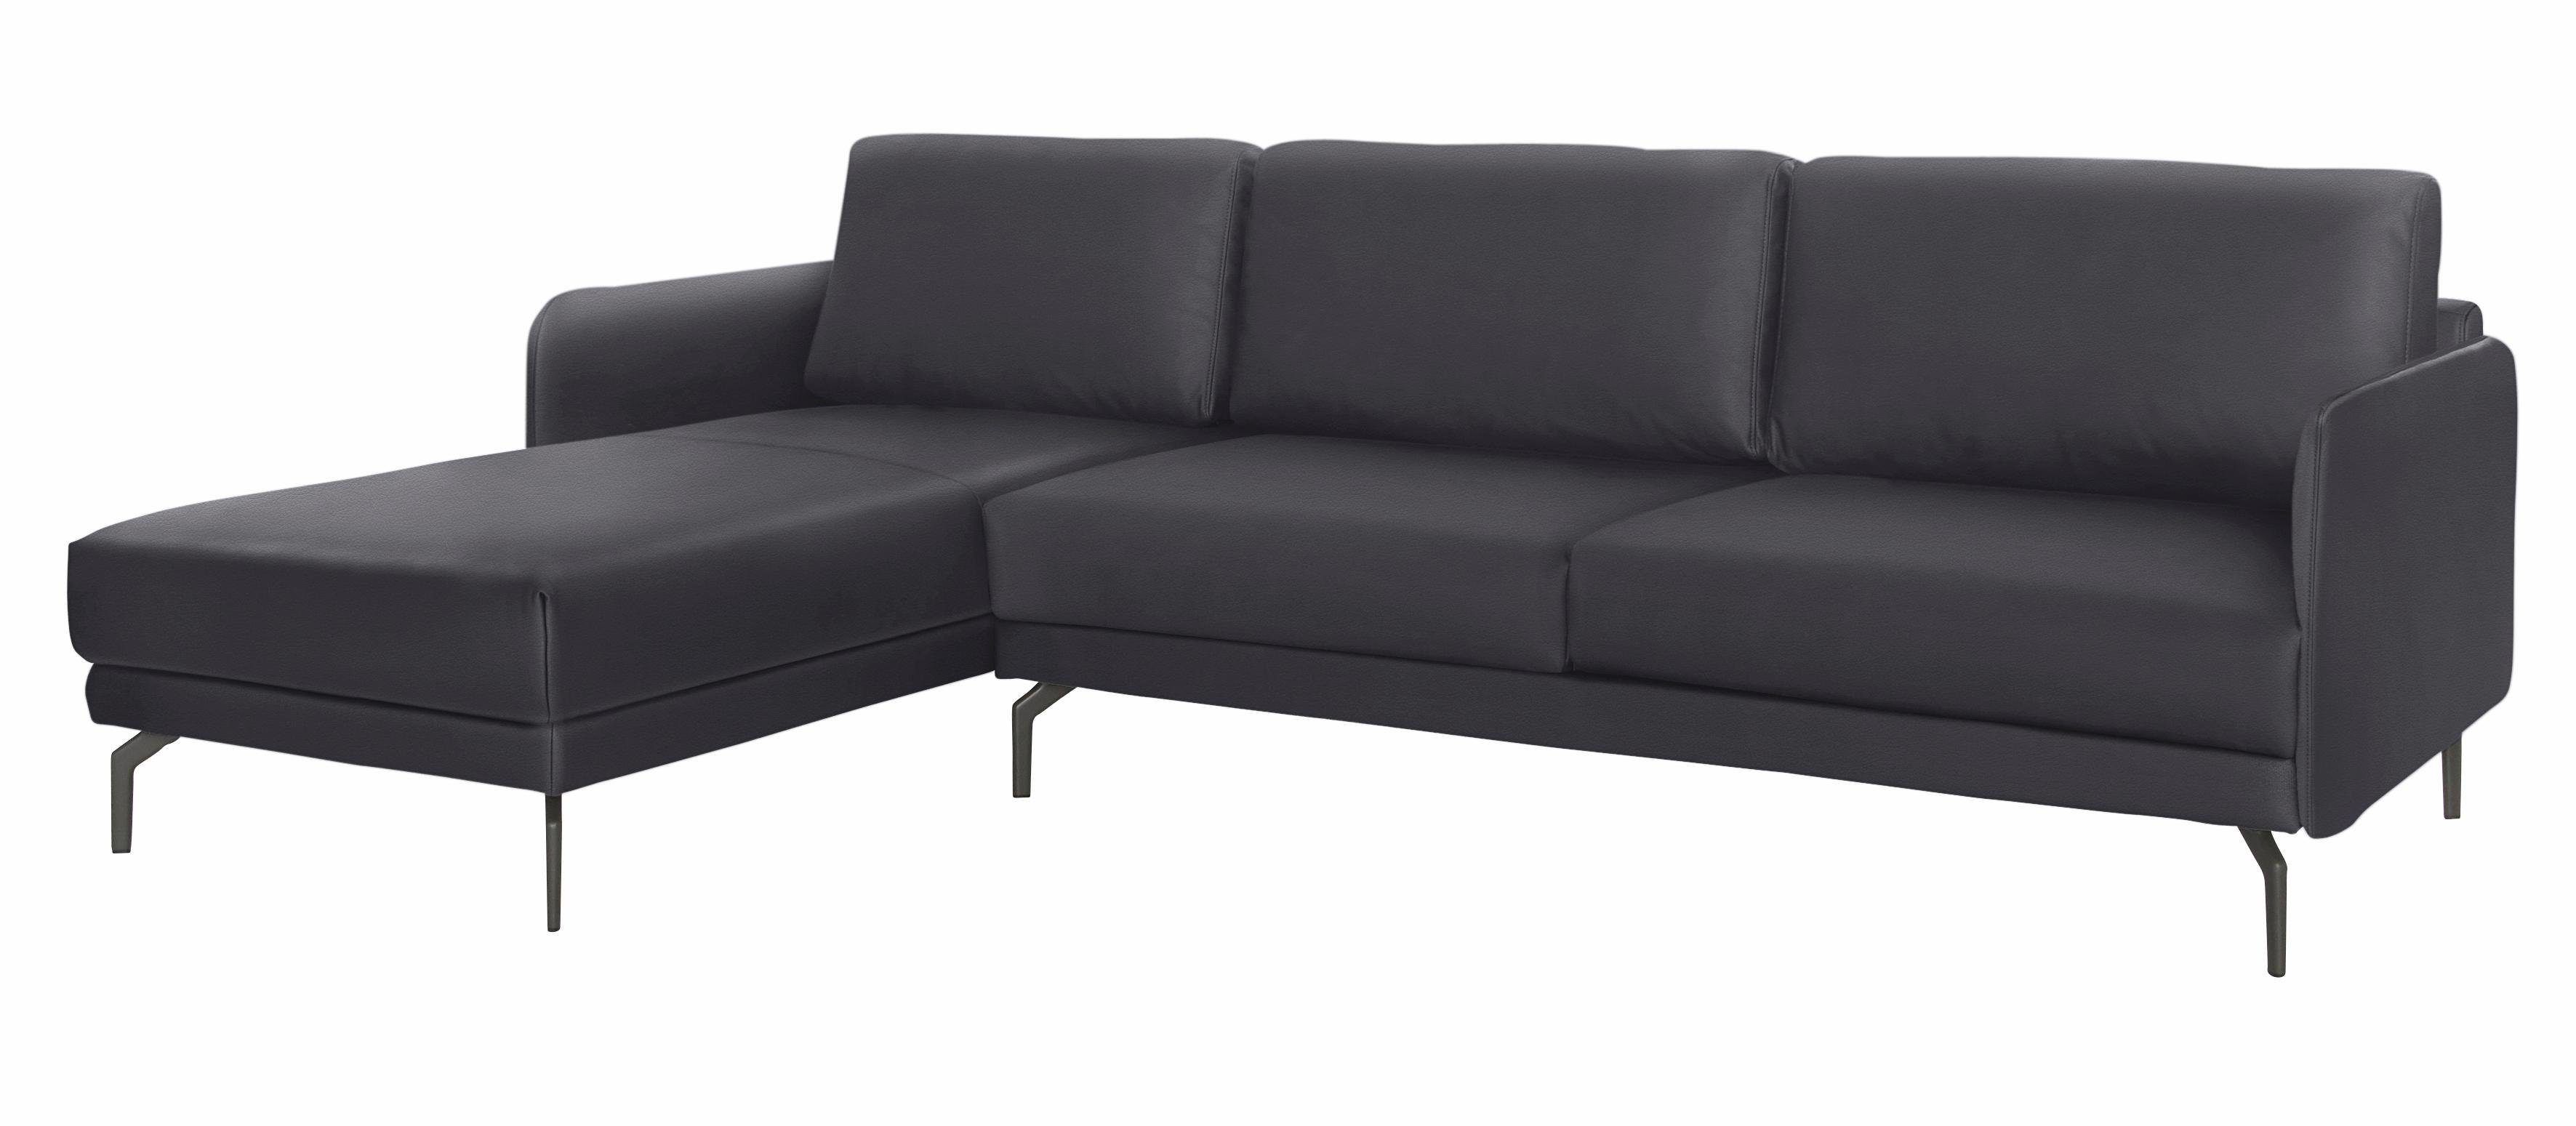 Ecksofa umbragrau schmal, hülsta sofa Breite cm, sehr Armlehne Alugussfüße hs.450, in 234